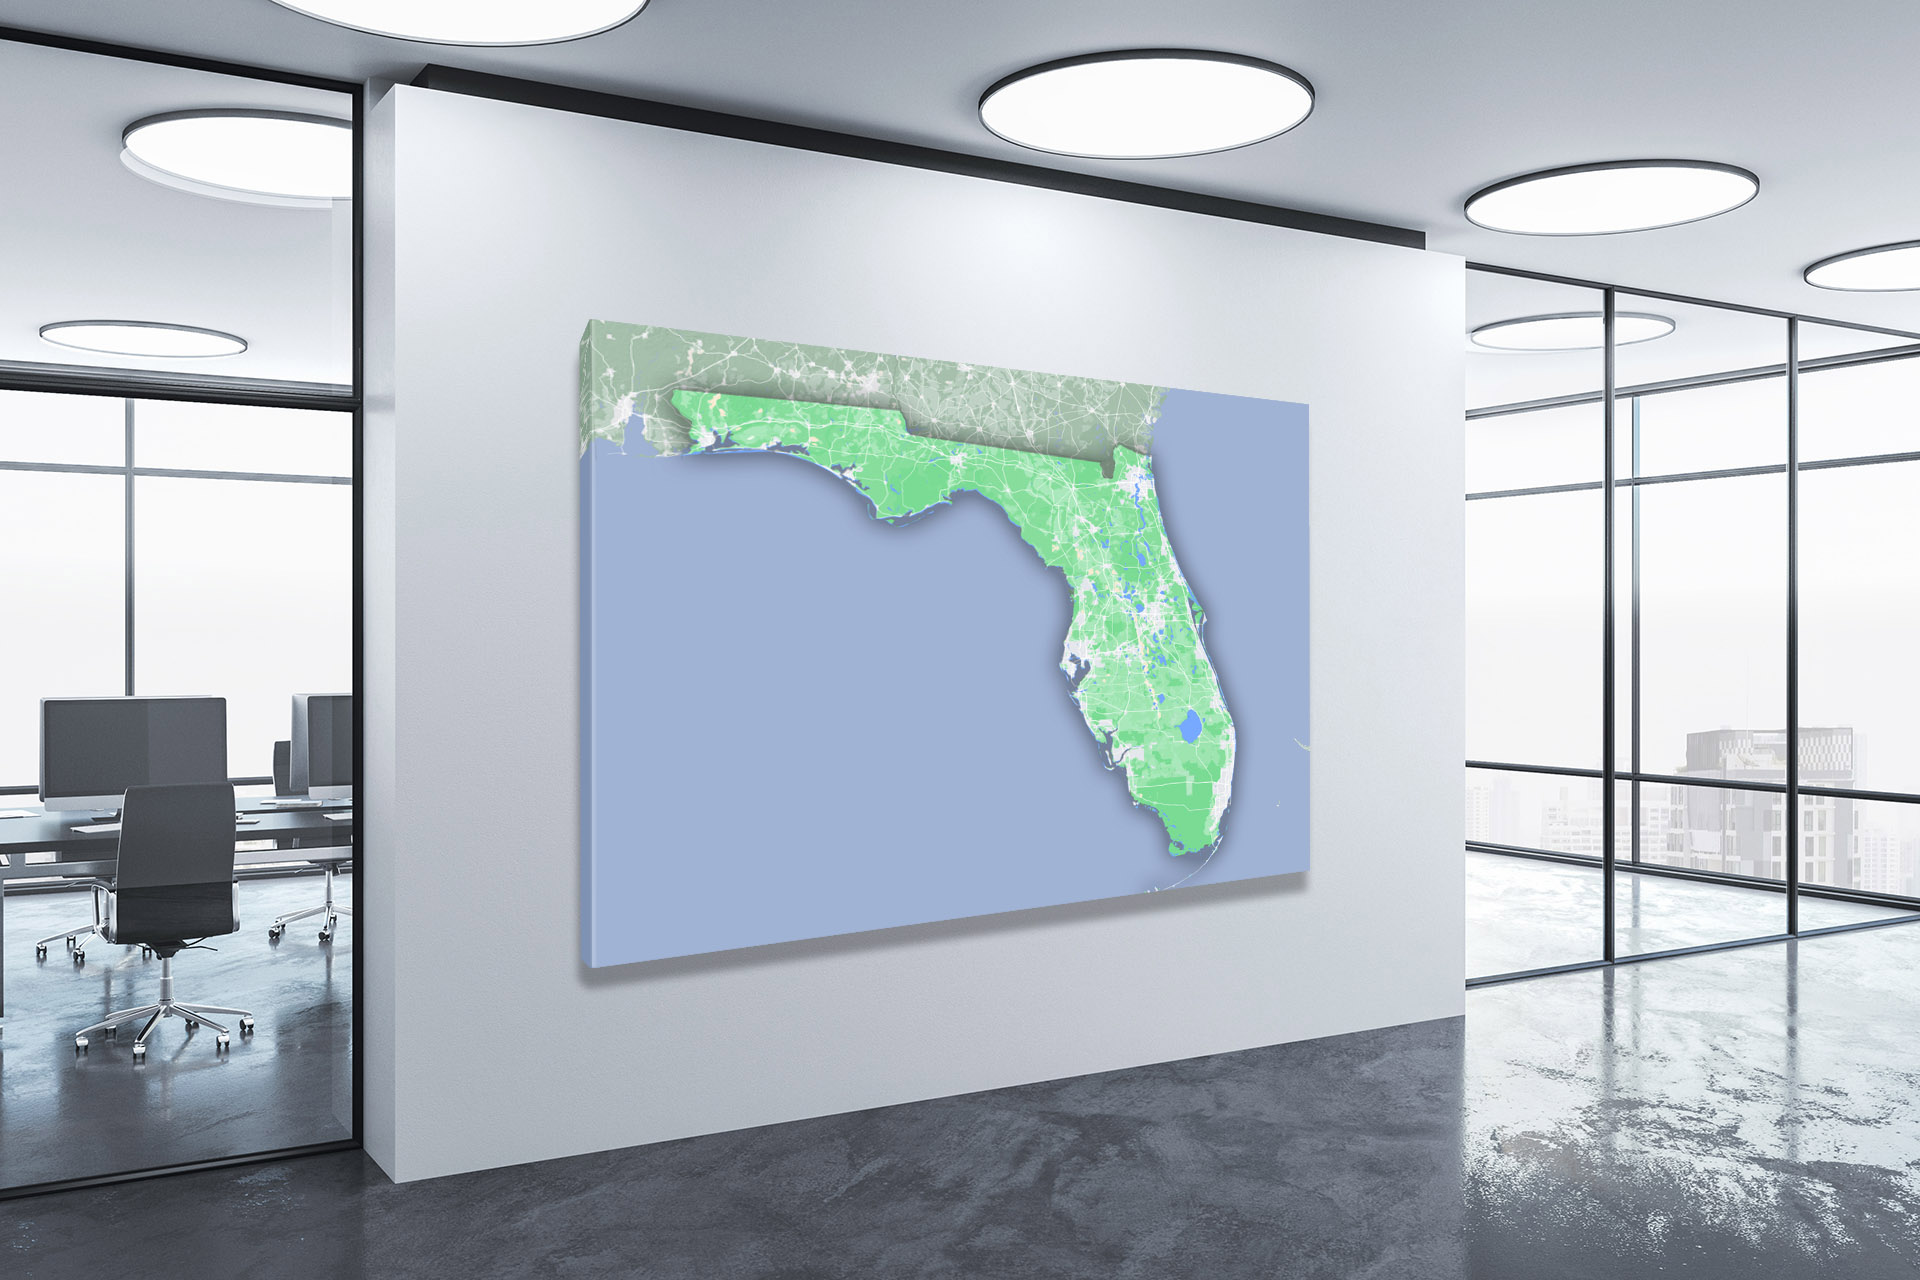 Terrain Wall Map of Florida